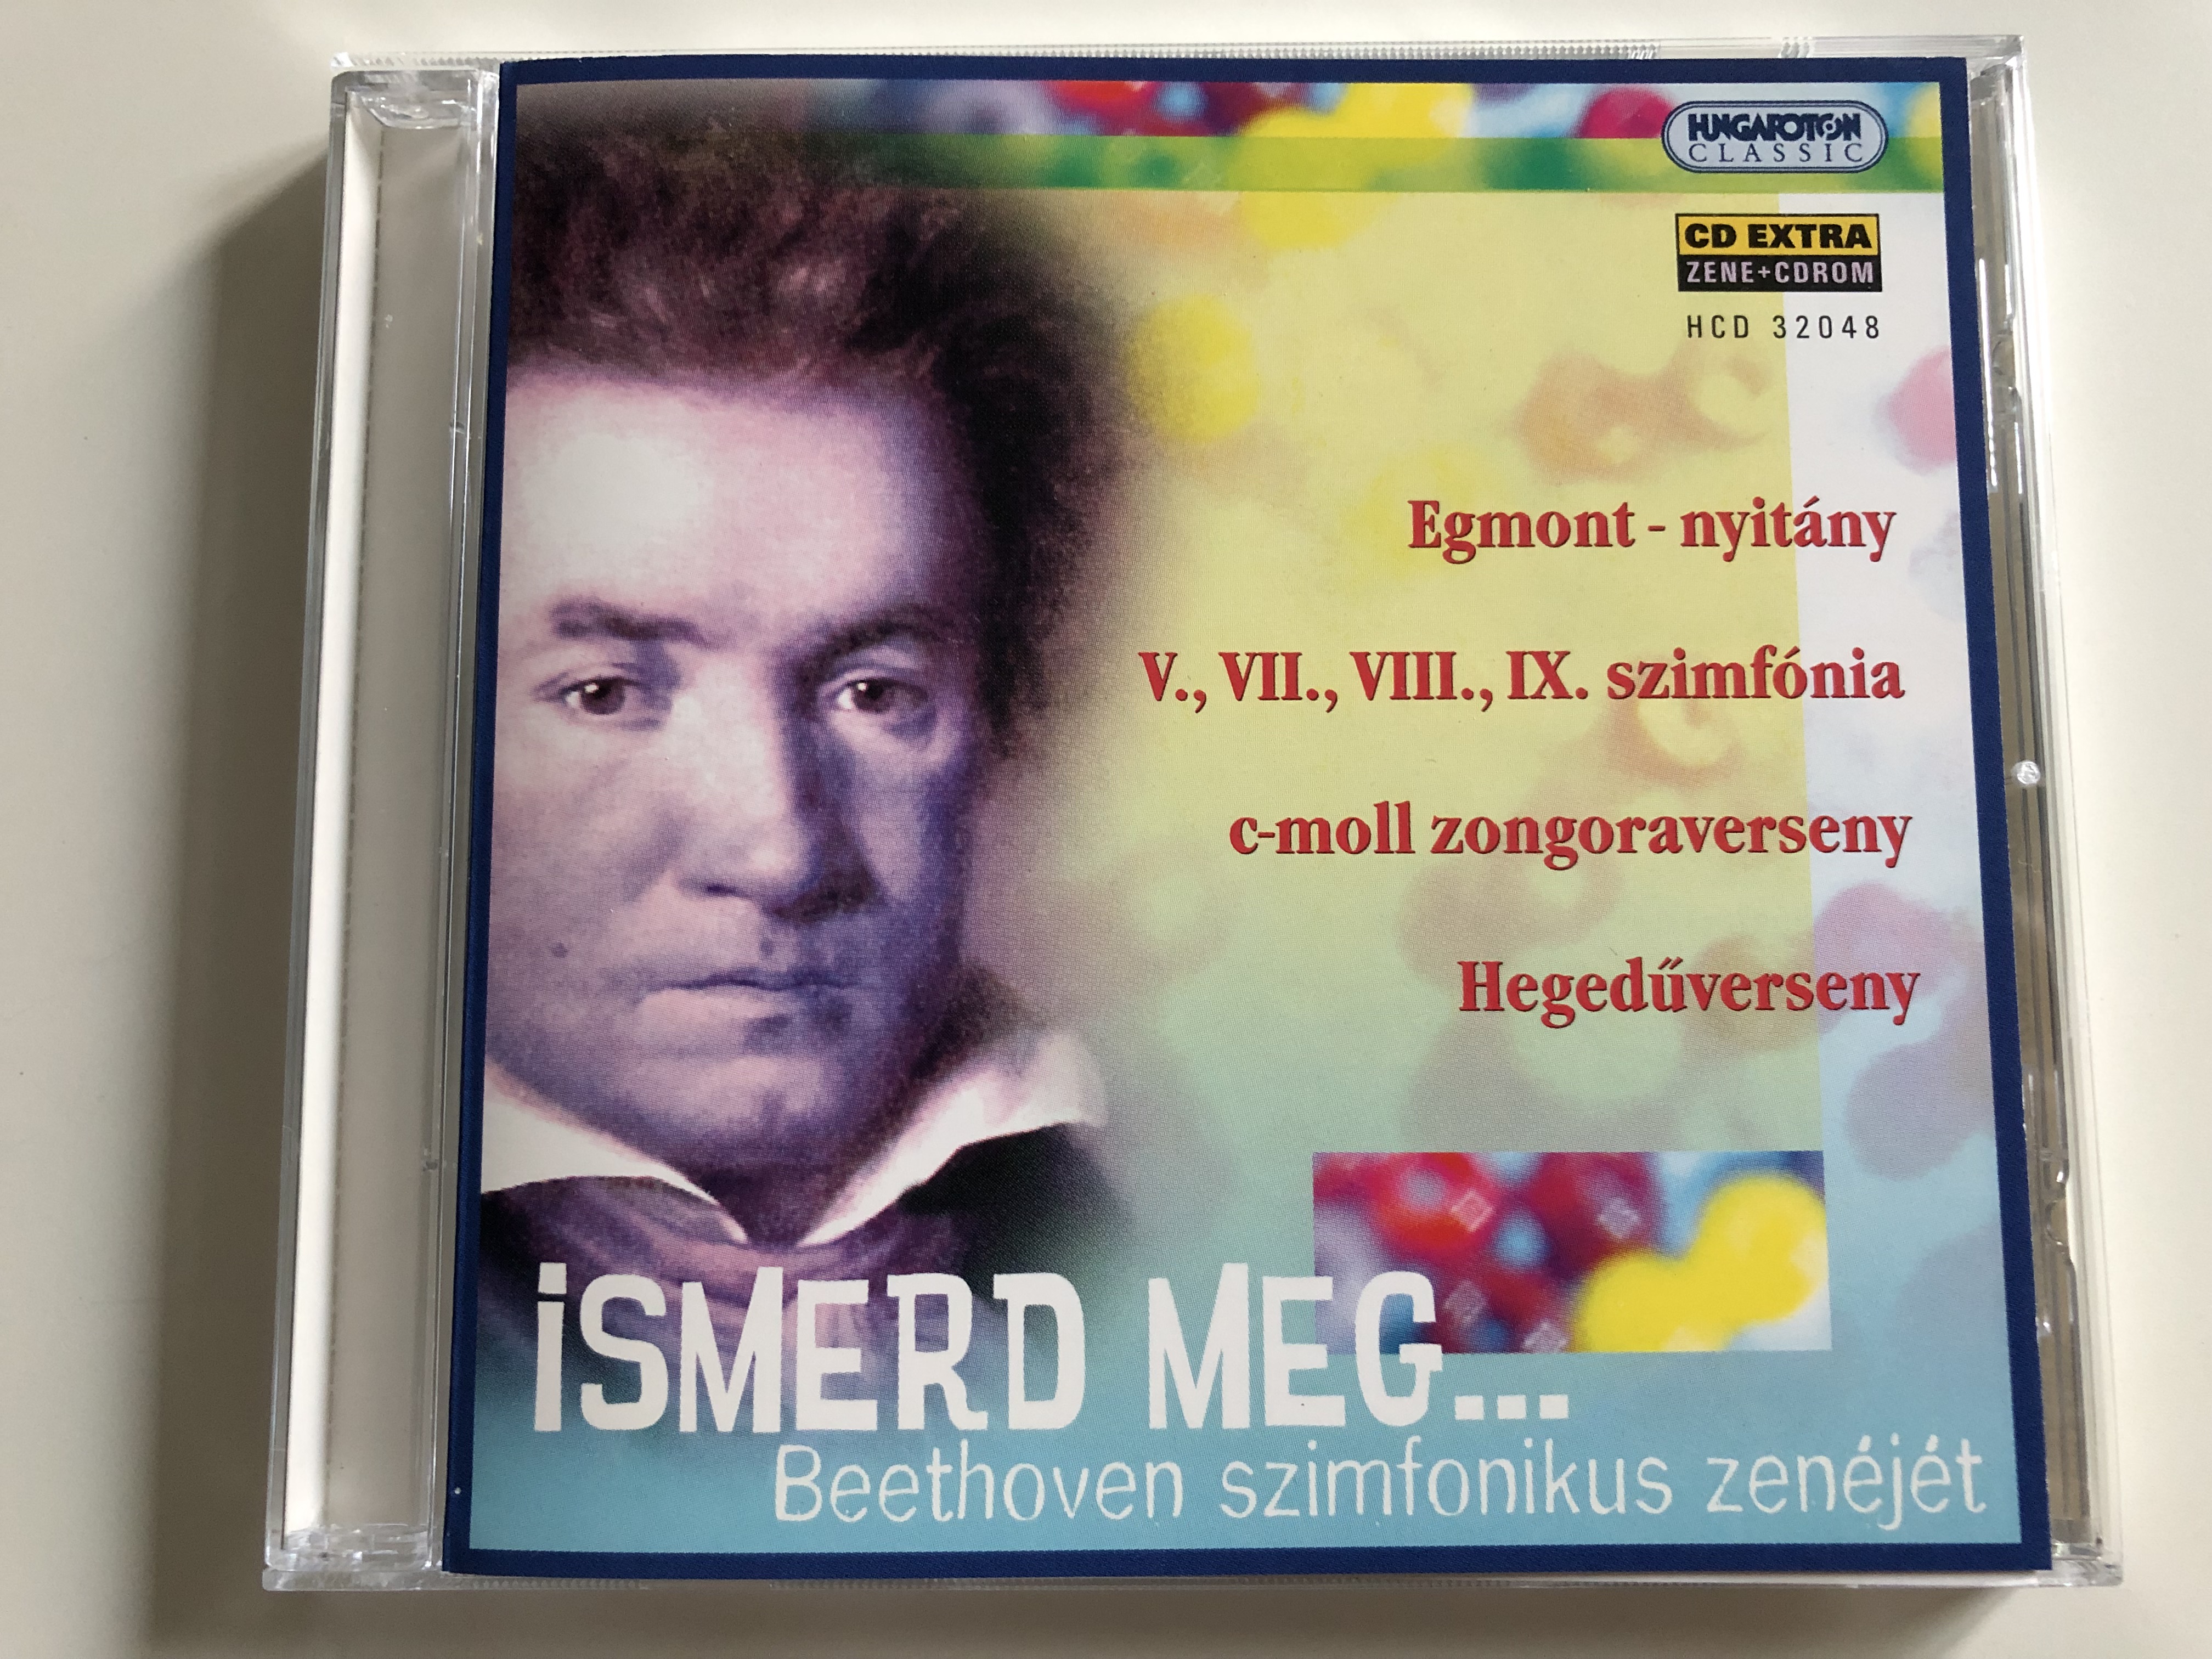 ismerd-meg...-beethoven-szimfonikus-zen-j-t-egmont-nyit-ny-v.-vii-viii.-ix.-szimf-nia-c-moll-zongoraverseny-heged-verseny-hungaroton-classic-audio-cd-2001-hcd-32048-1-.jpg